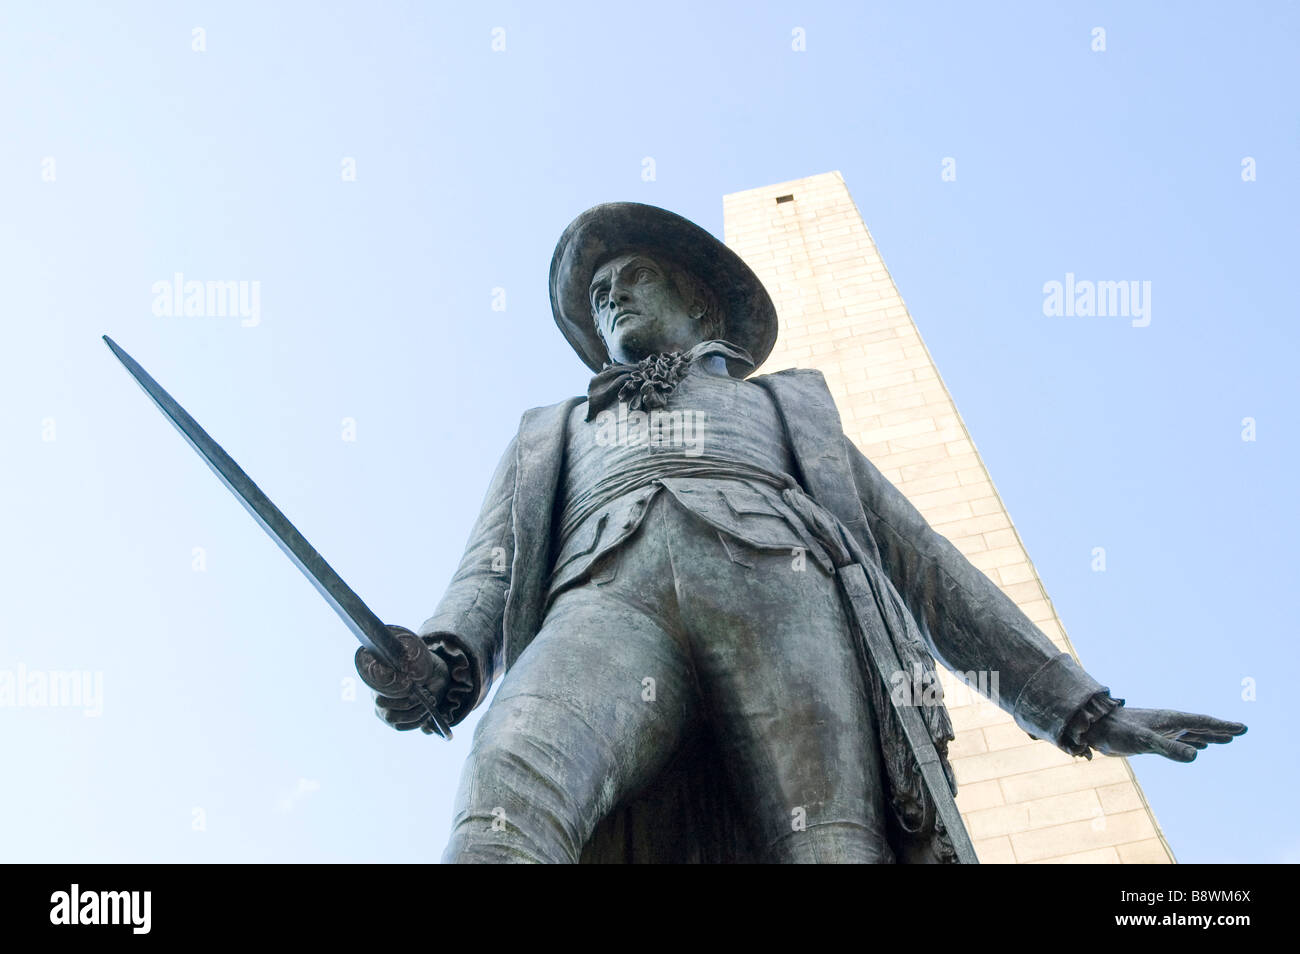 The statue of Colonel William Prescott at the Bunker Hill Monument Charlestown Boston Stock Photo